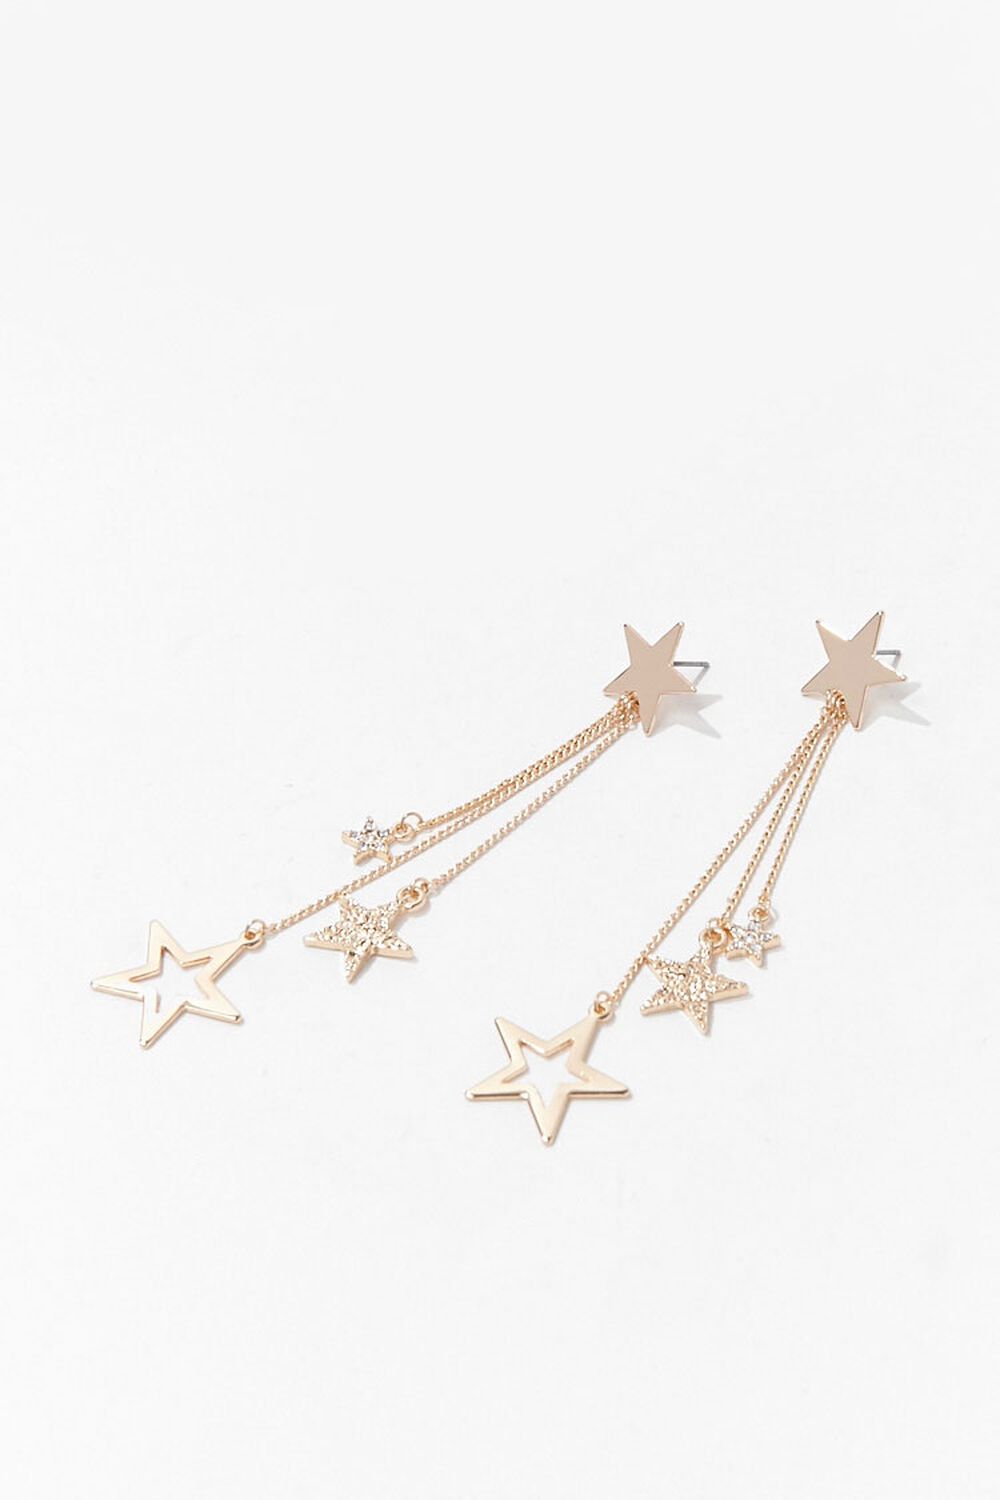 GOLD/CLEAR Rhinestone Star Drop Earrings, image 3